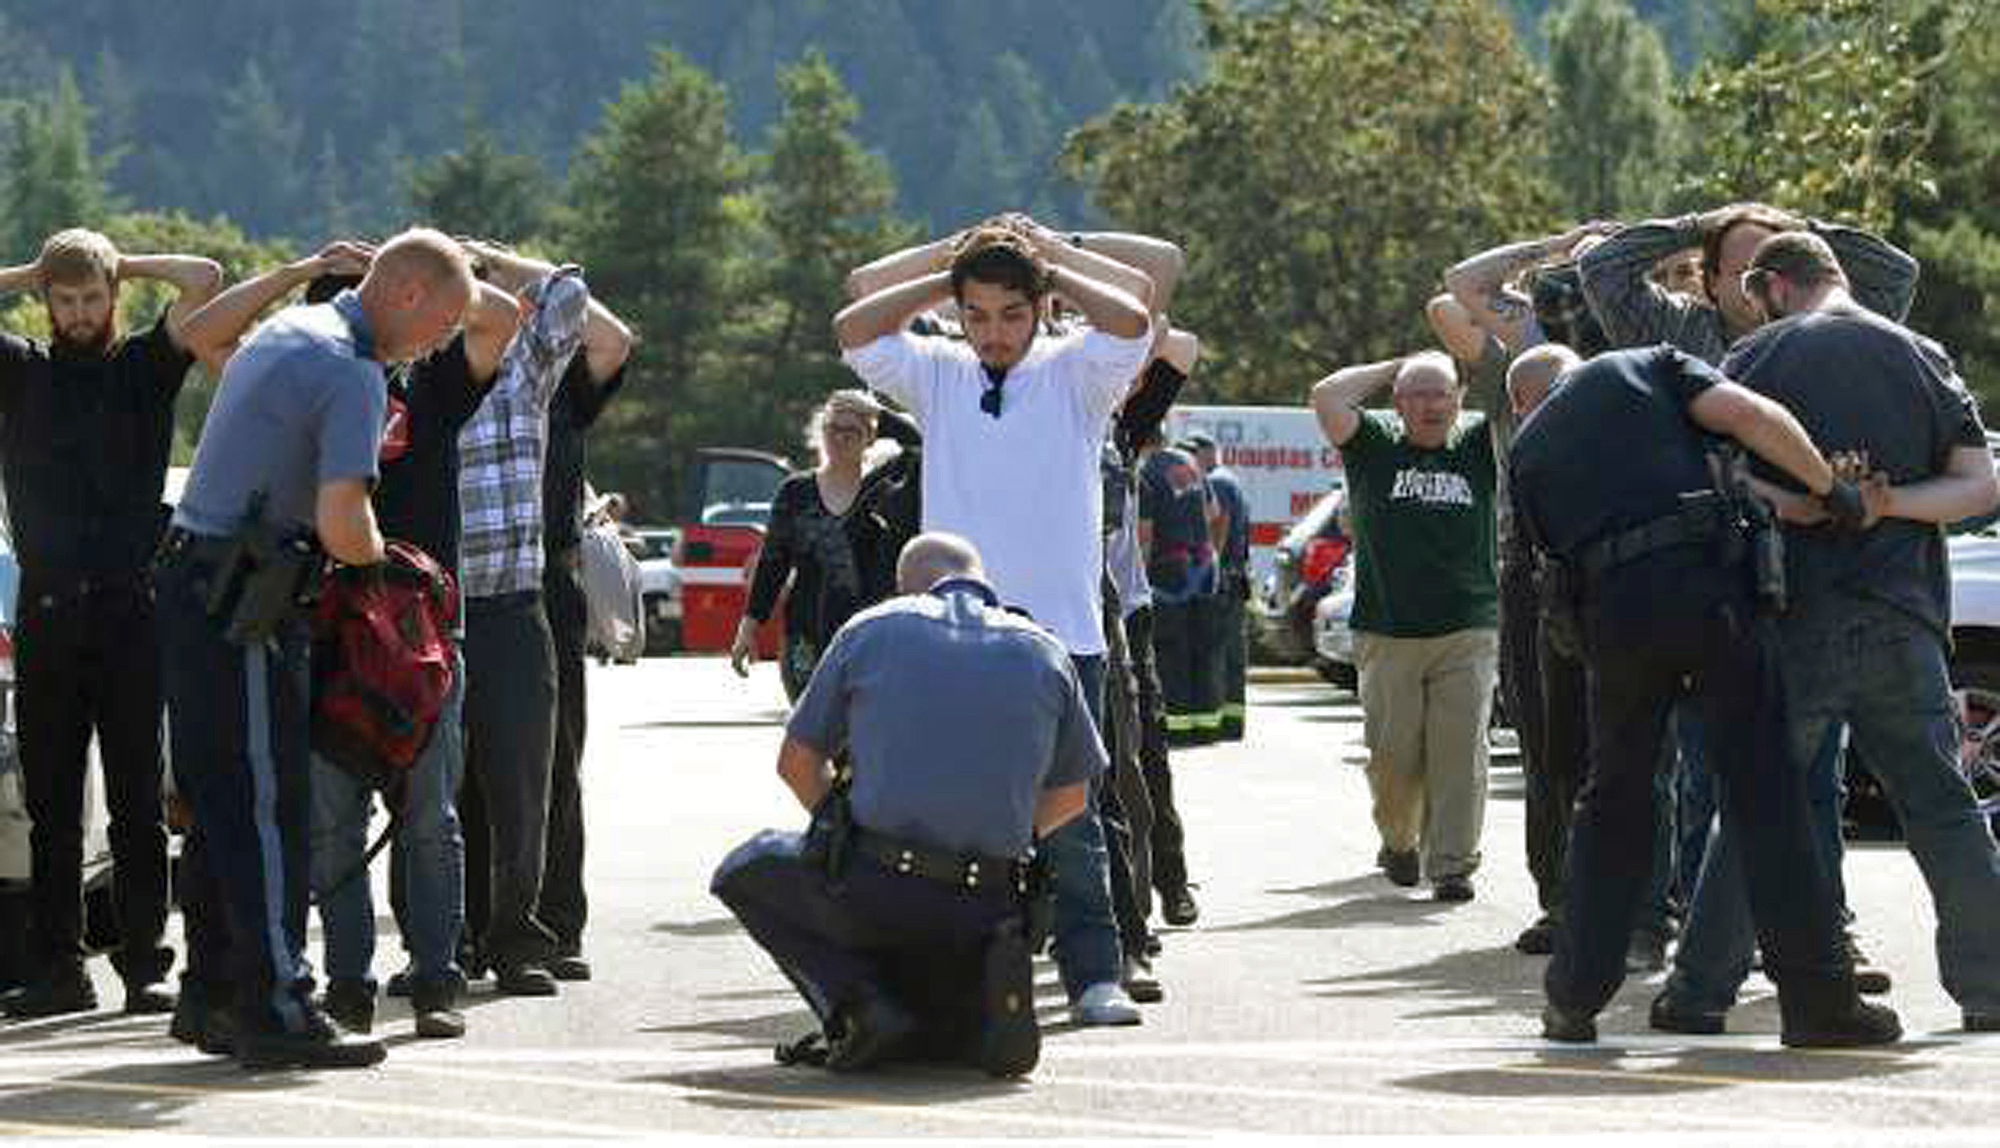 Police search students outside Umpqua Community College in Roseburg. Photo: AP